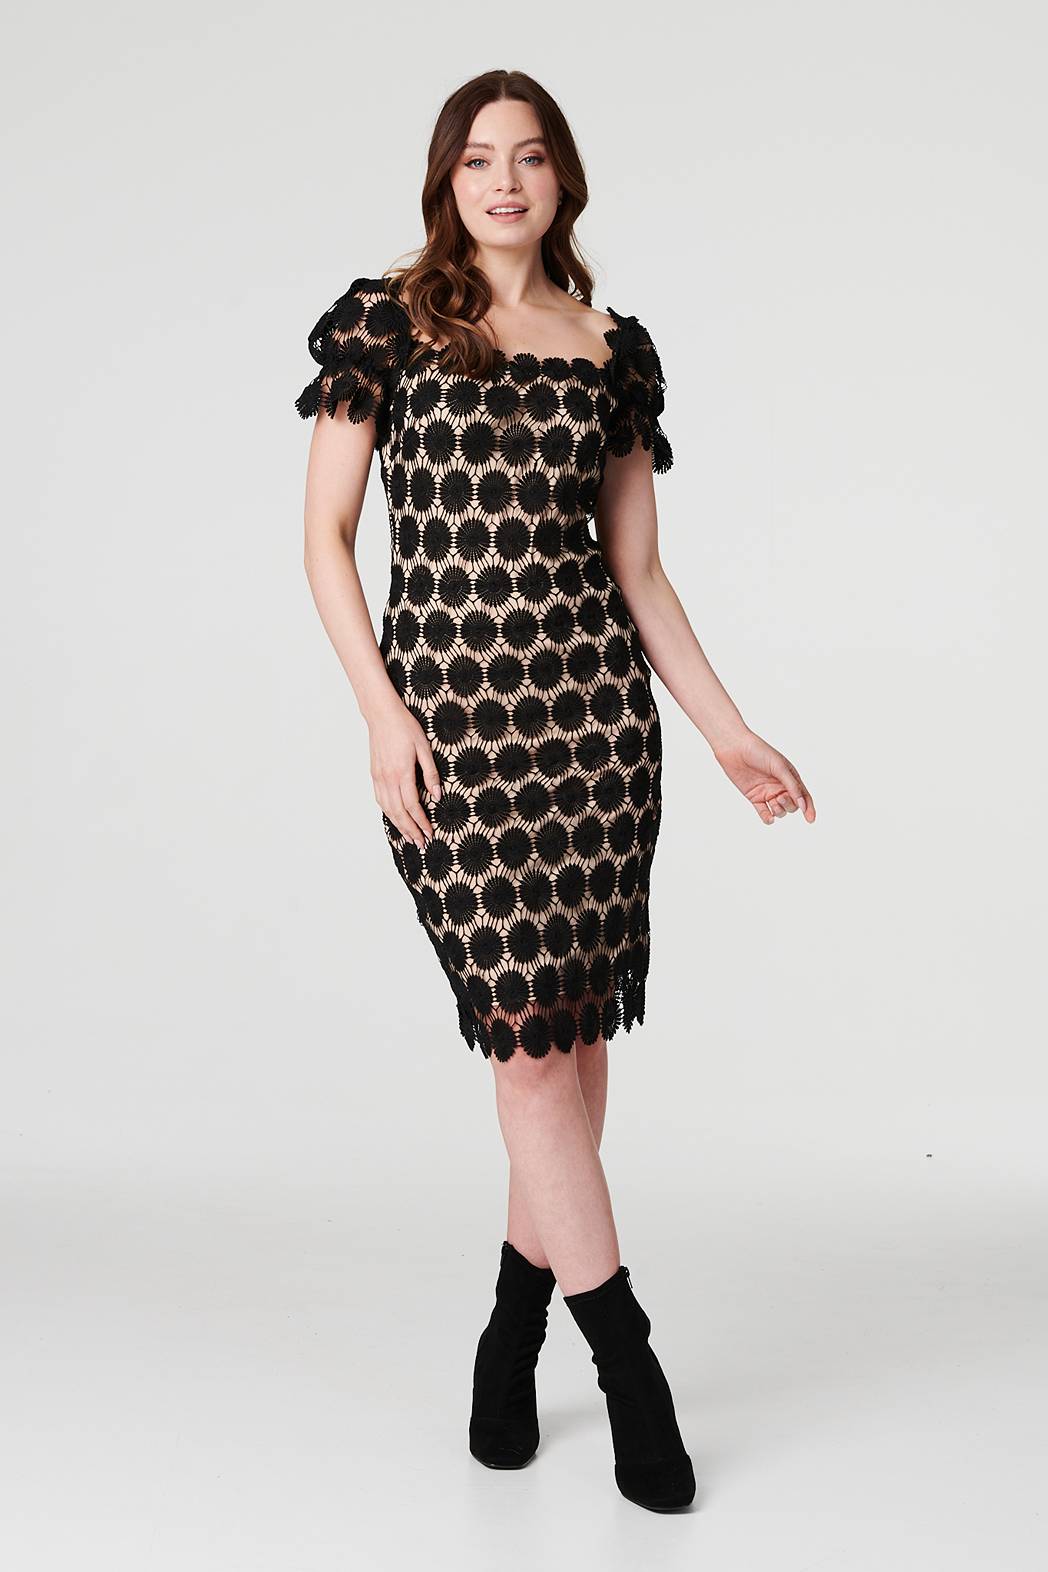 Black | Floral Lace Bodycon Dress : Model is 5'9"/175 cm and wears UK8/EU36/US4/AUS8